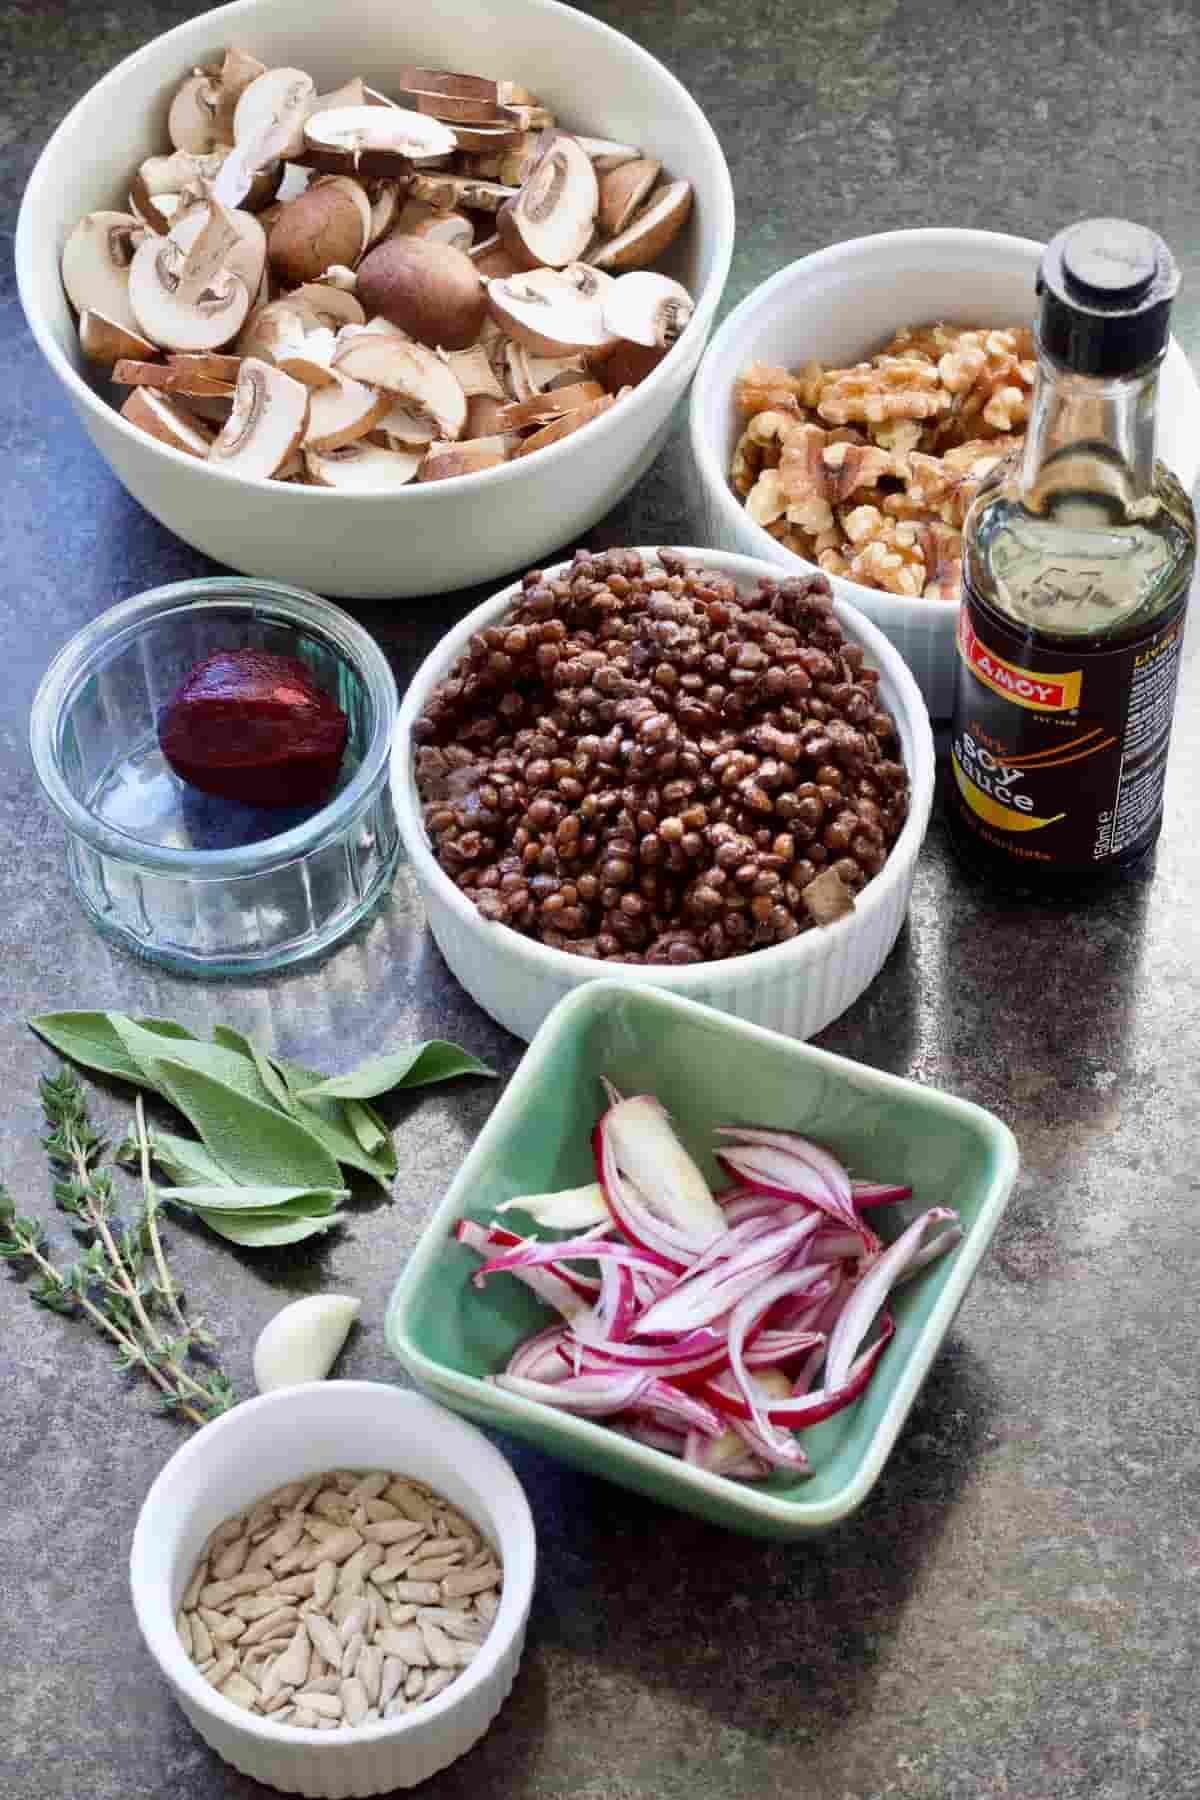 Ingredients to make Mushroom and Walnut Pâté.